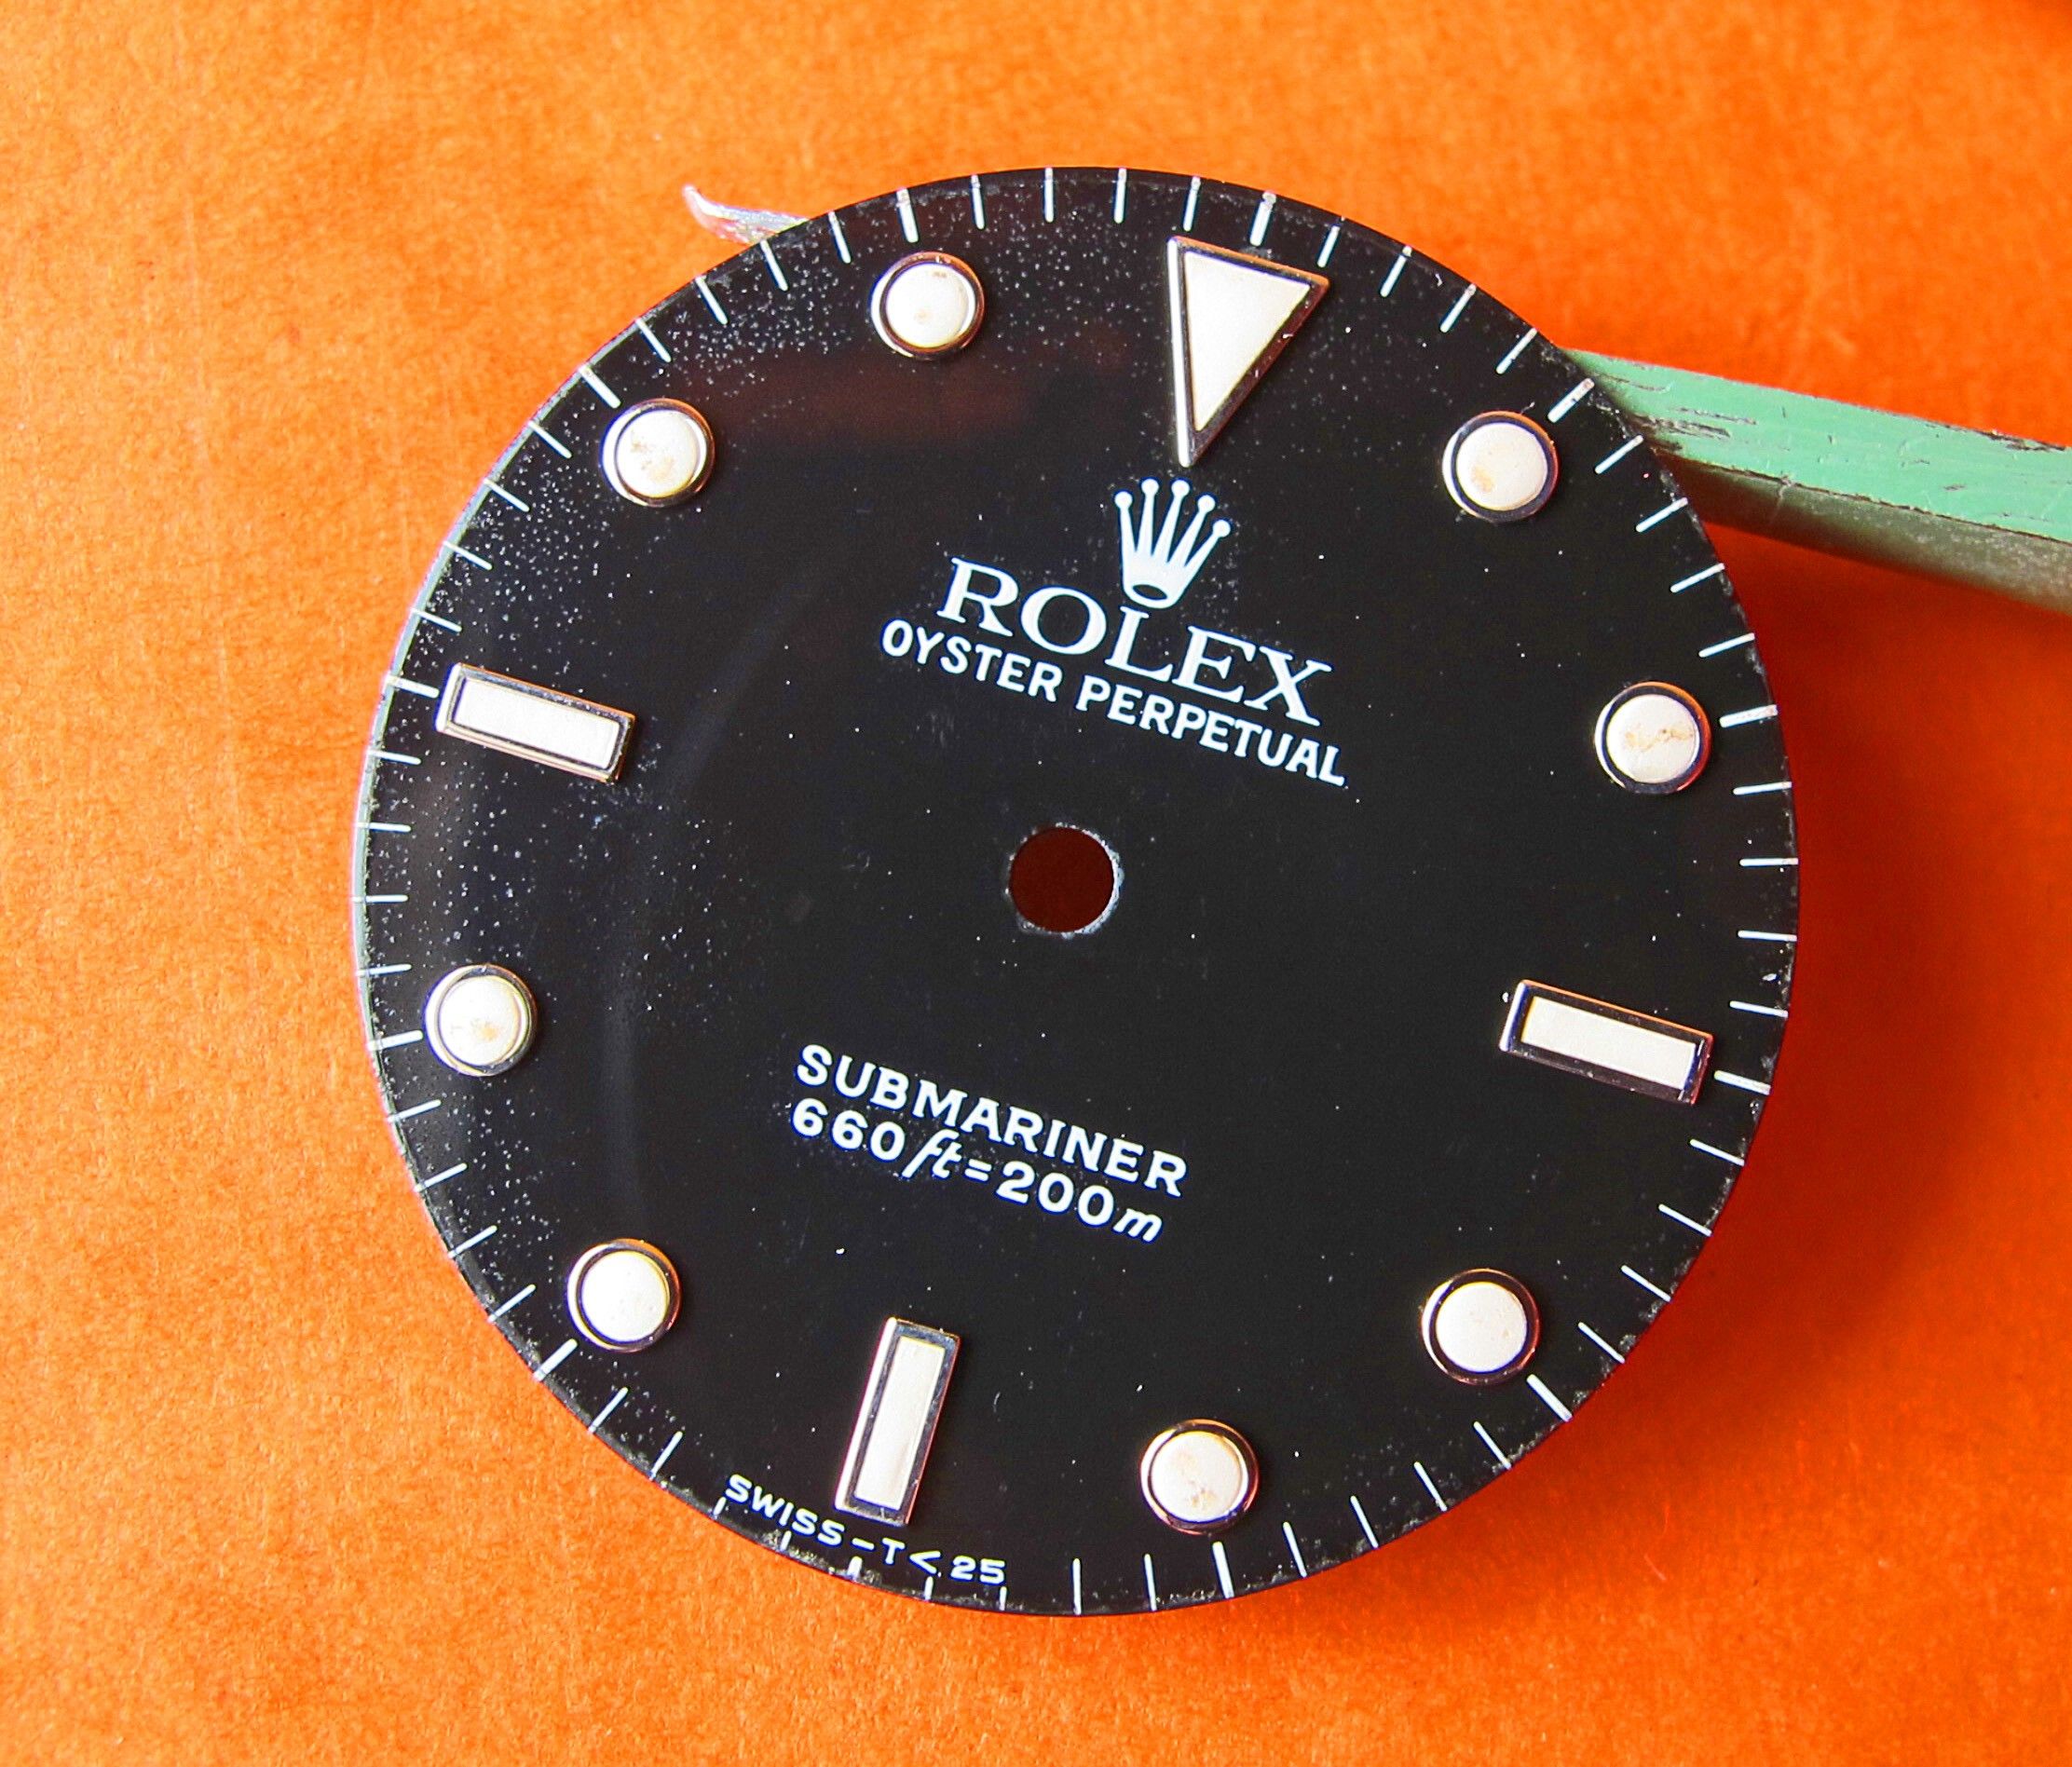 ROLEX VINTAGE DIAL SUBMARINER 5513 CIRCLED